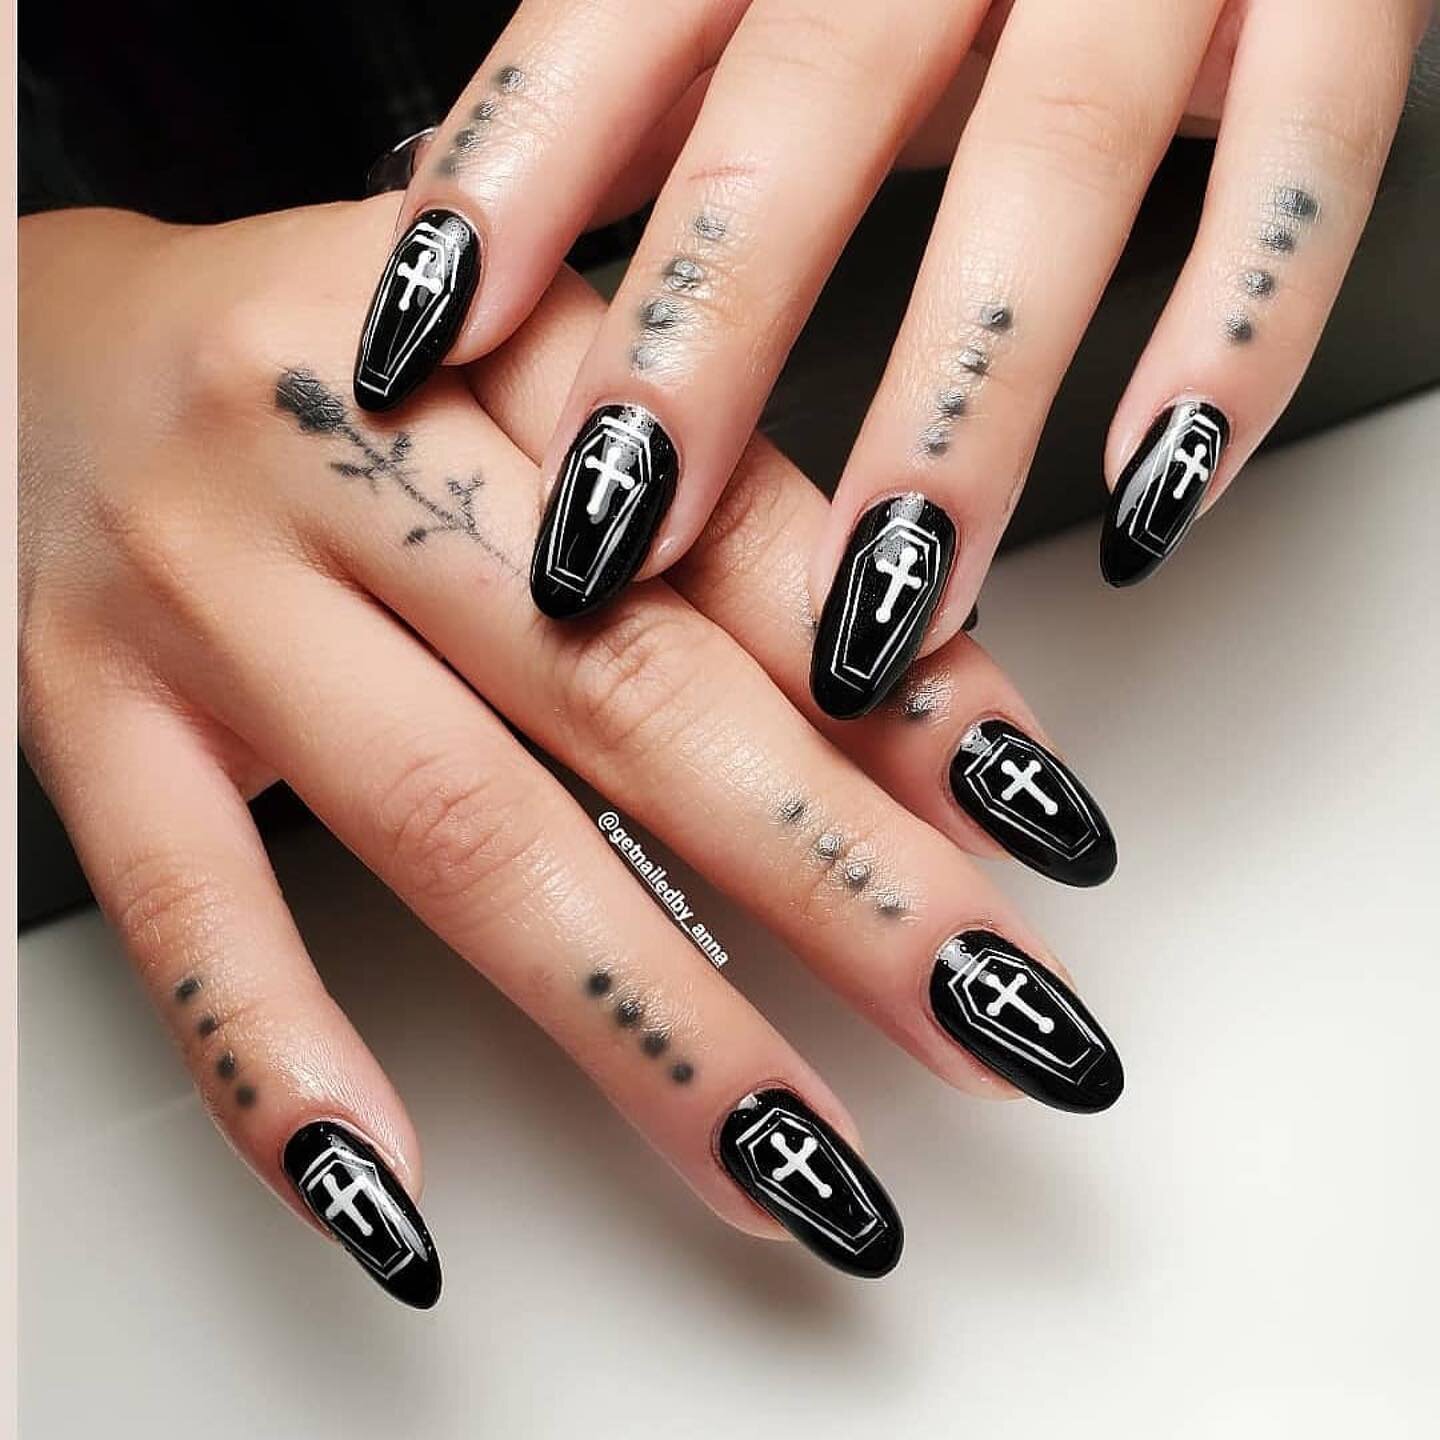 #Repost @getnailedby_anna
・・・
#nailarts #nailsbyme&nbsp; #jerseycitynails #gelmanicure #naildesigns #nailsoftheday #NOTD #njnailartist #jcnailtech #nailarts #abstractnails #nailcolors #jerseycity #nailarts #gelmanicure #hands #fingers #gelnails #neon